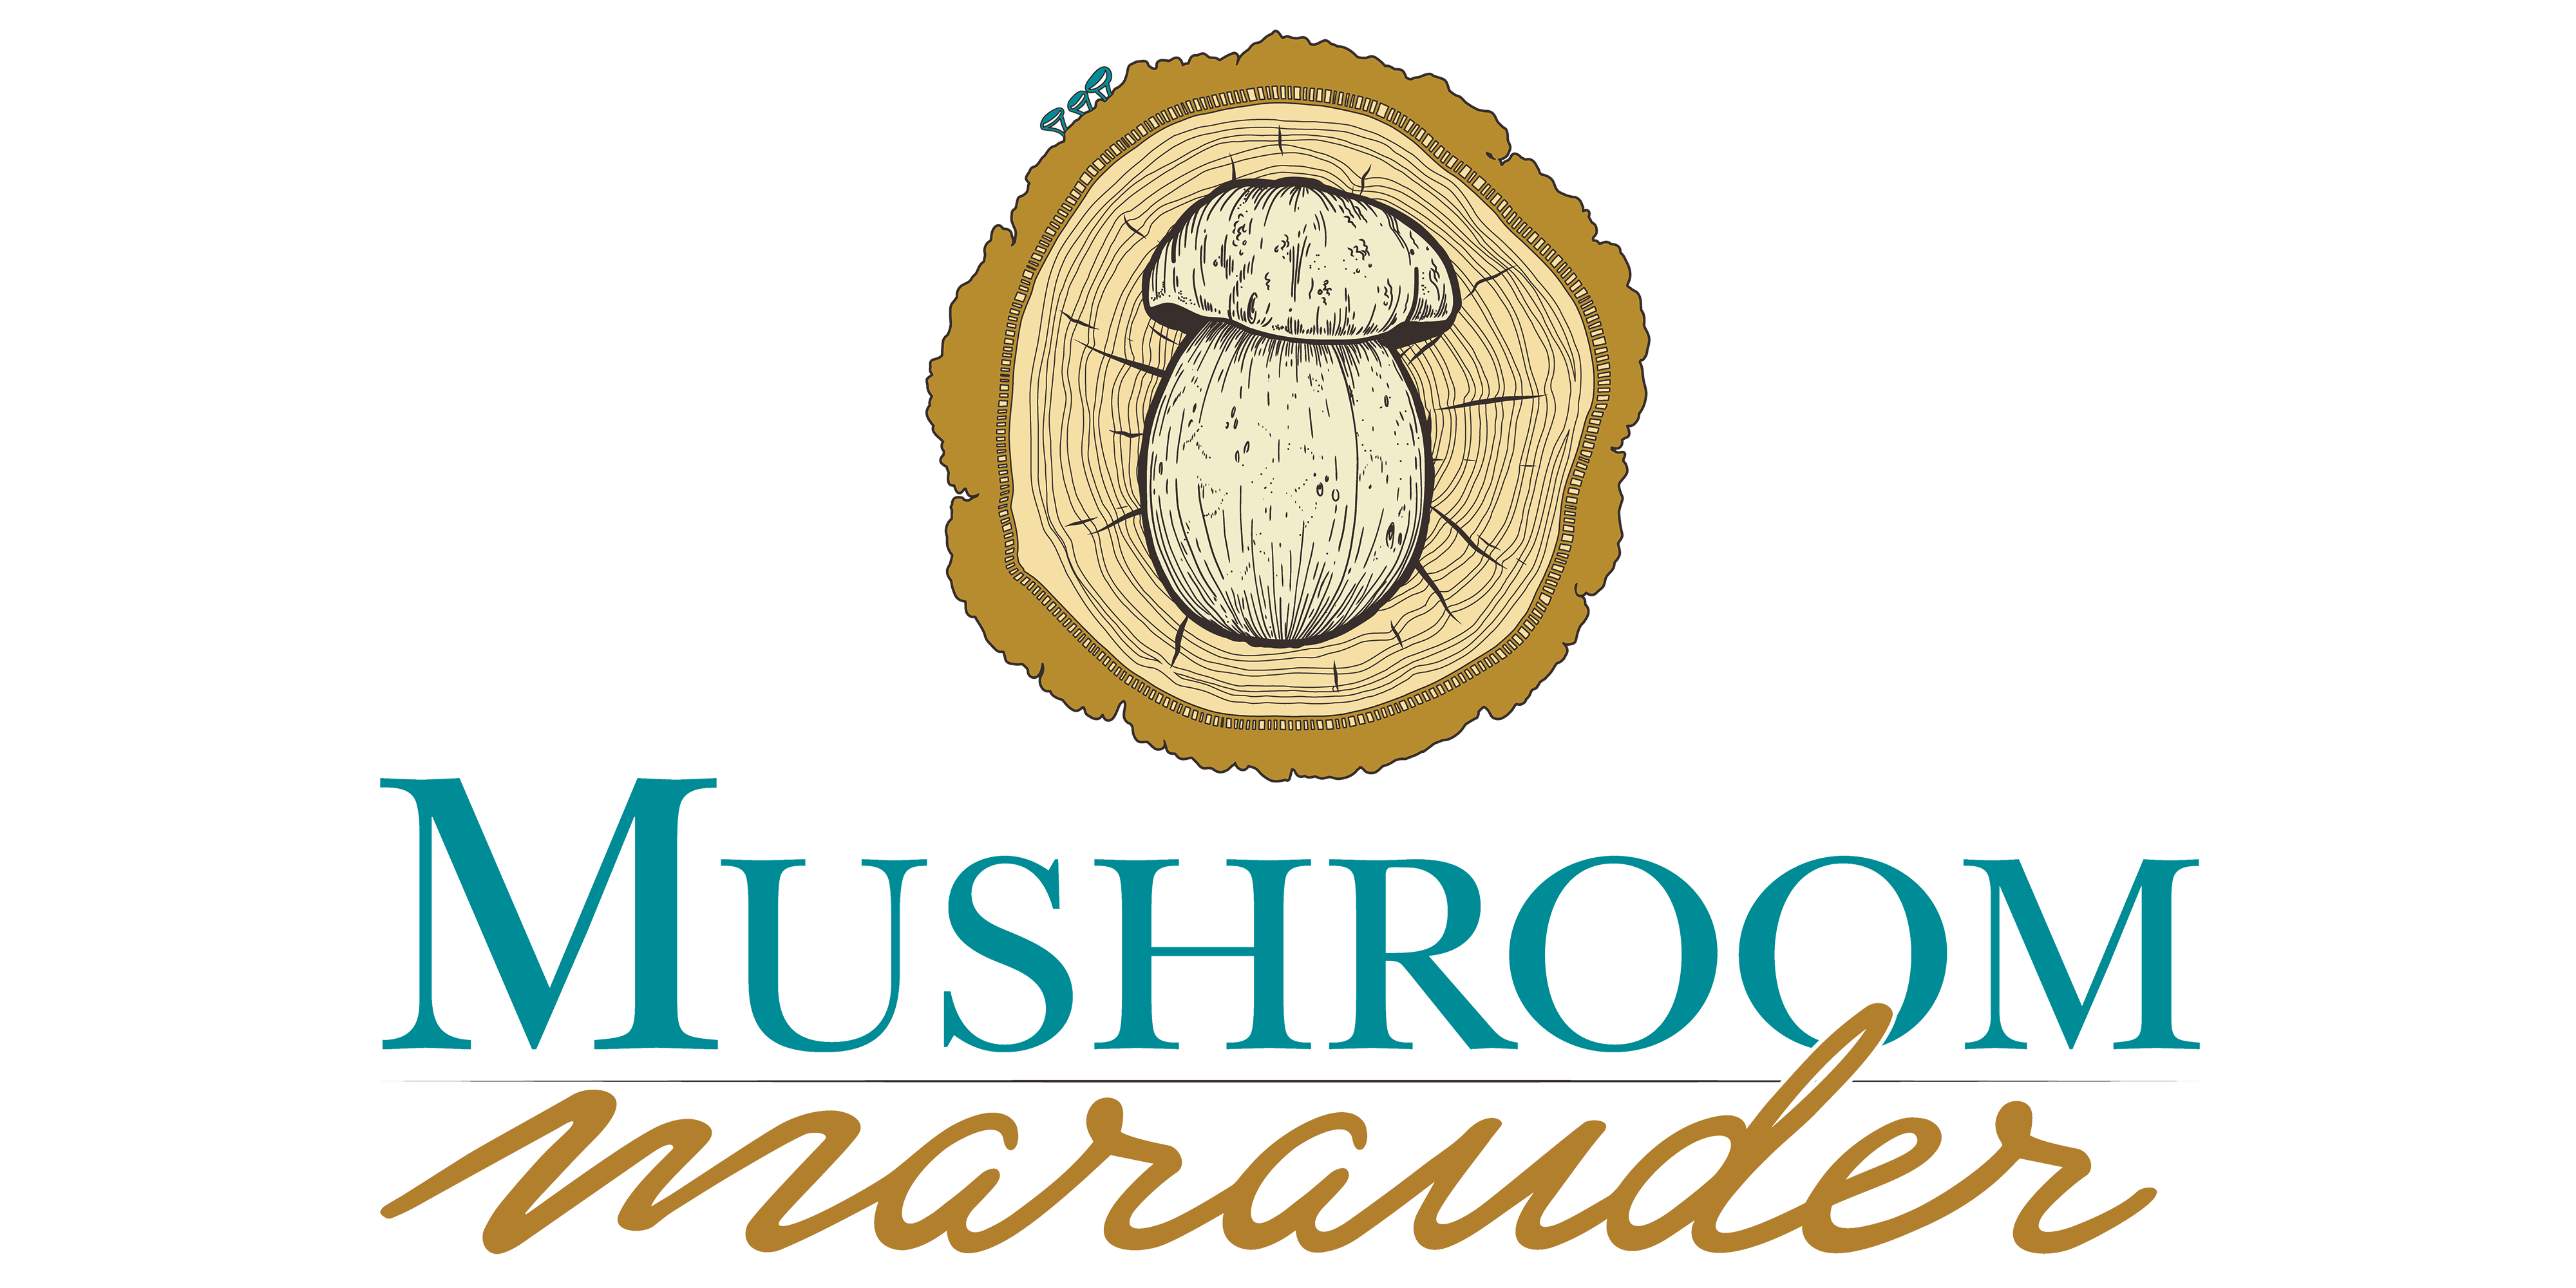 Mushroom Marauder